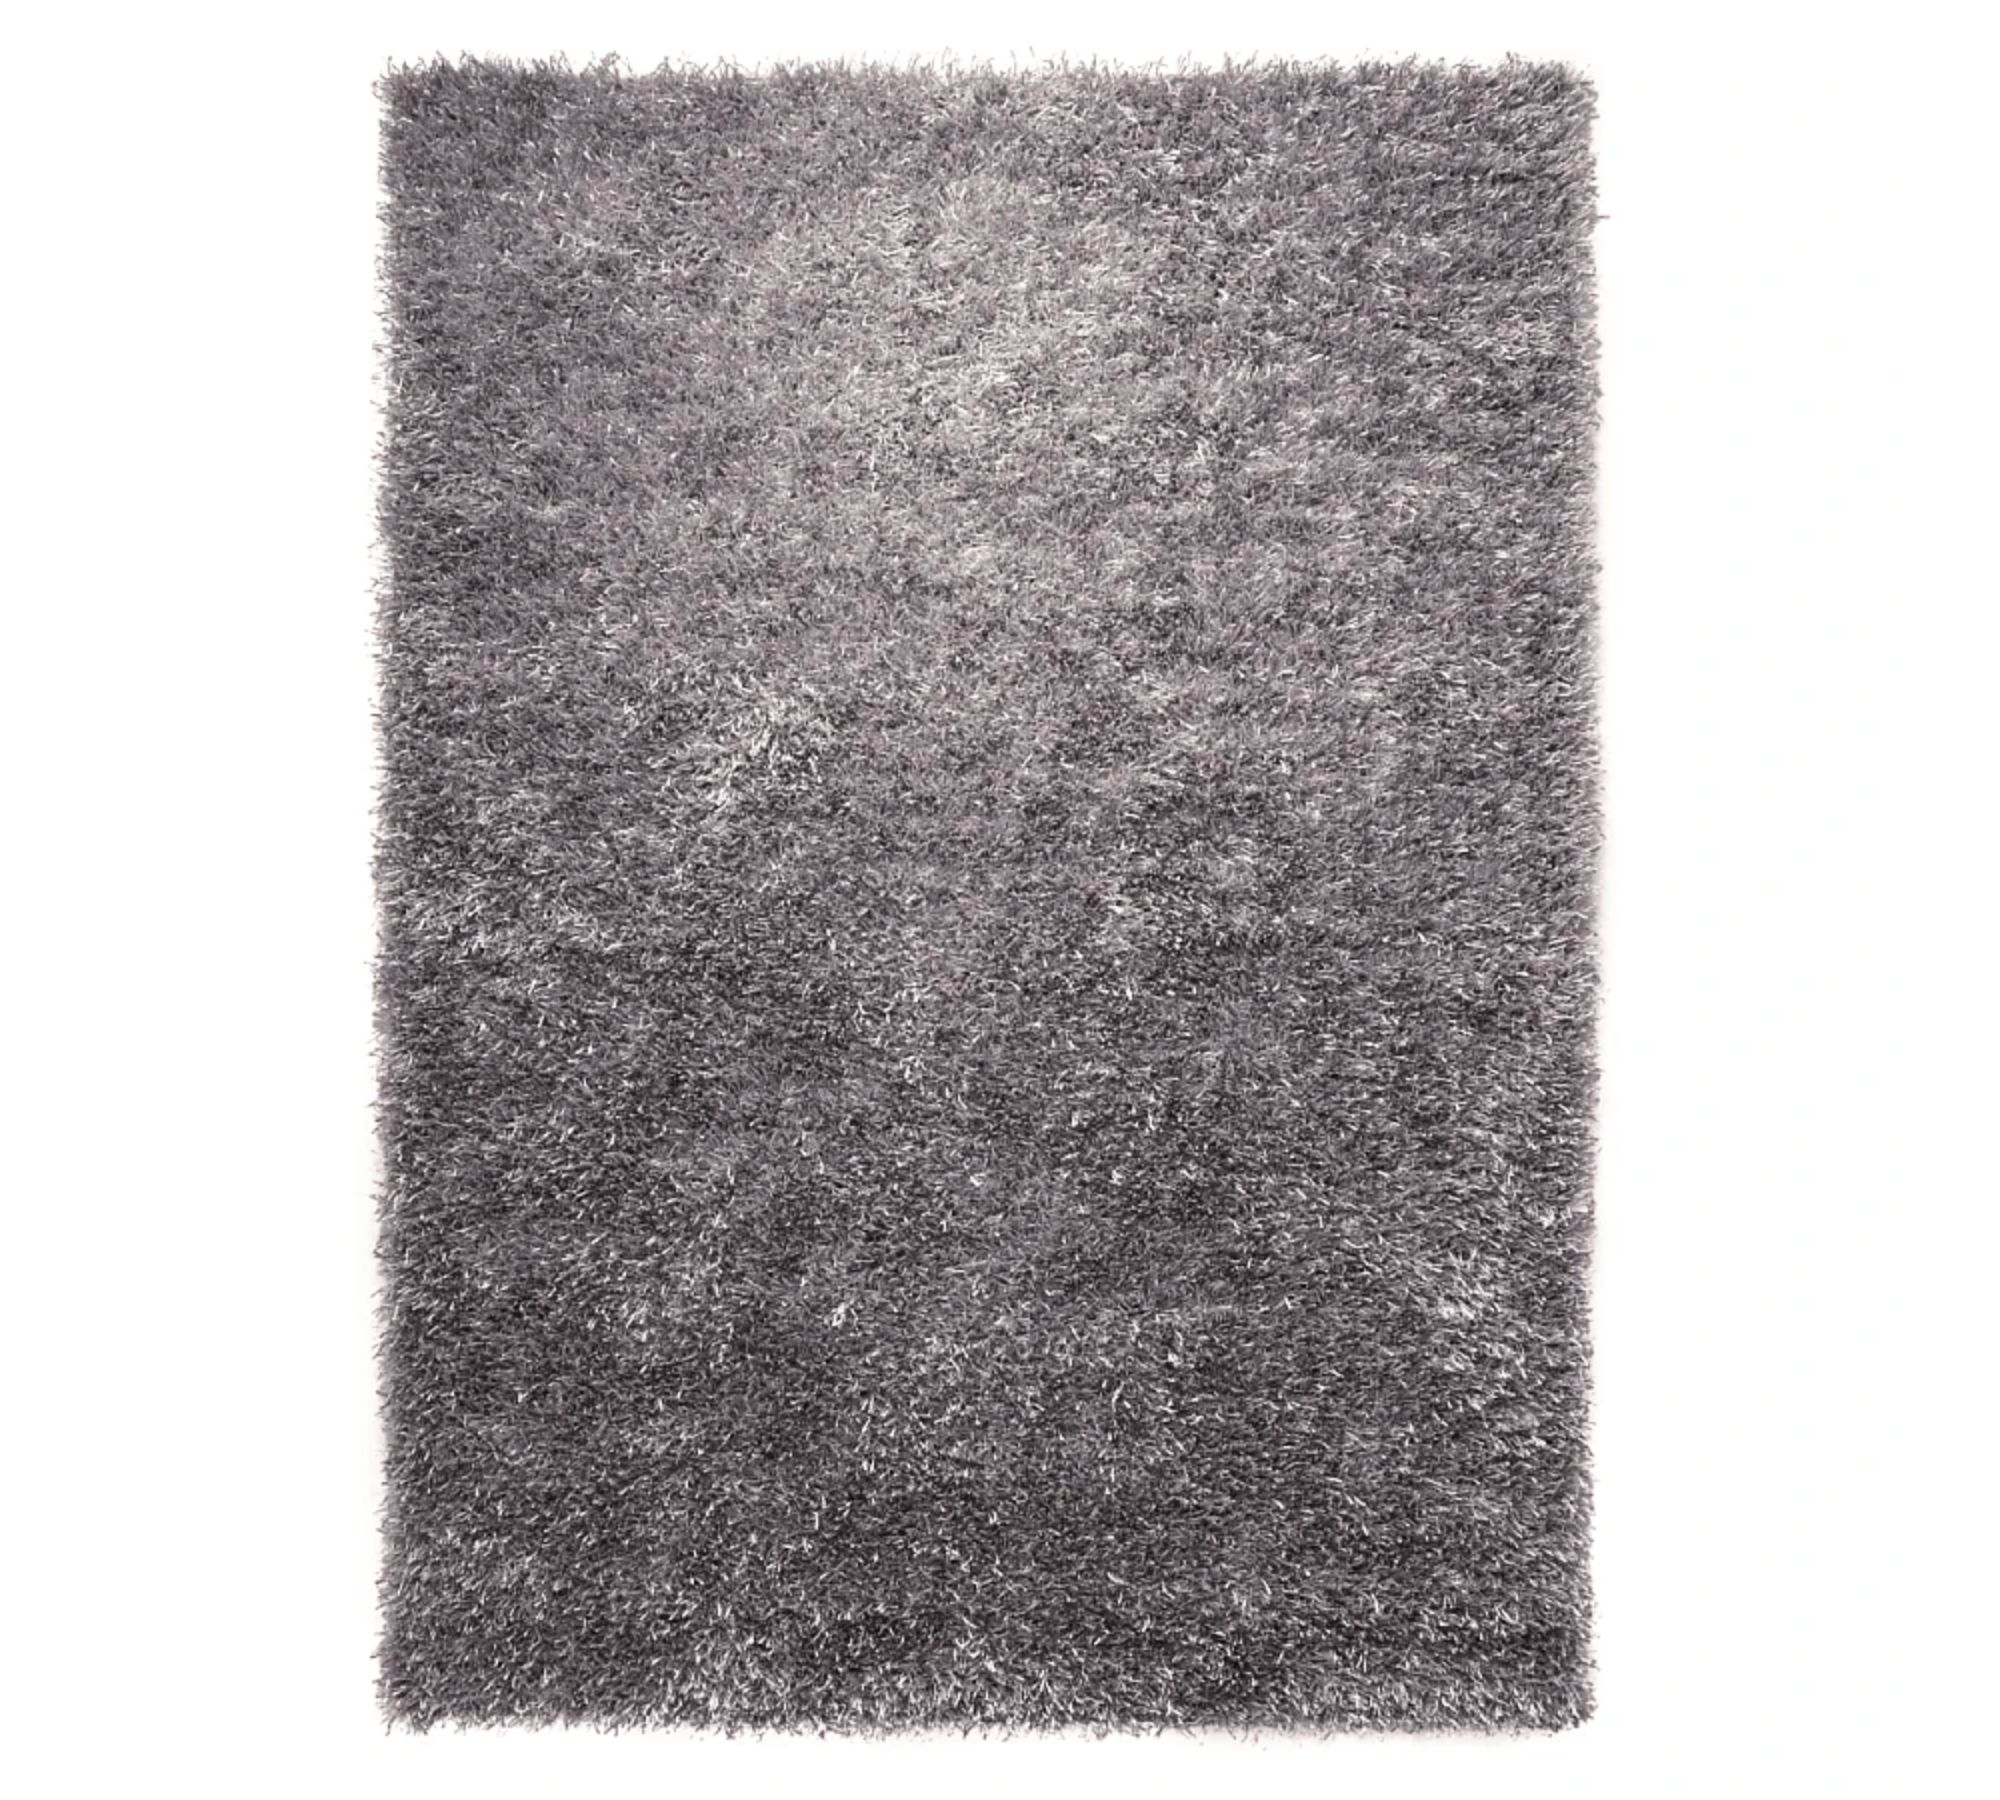 Teppich Kunstfaser Grau 70 x 140 cm